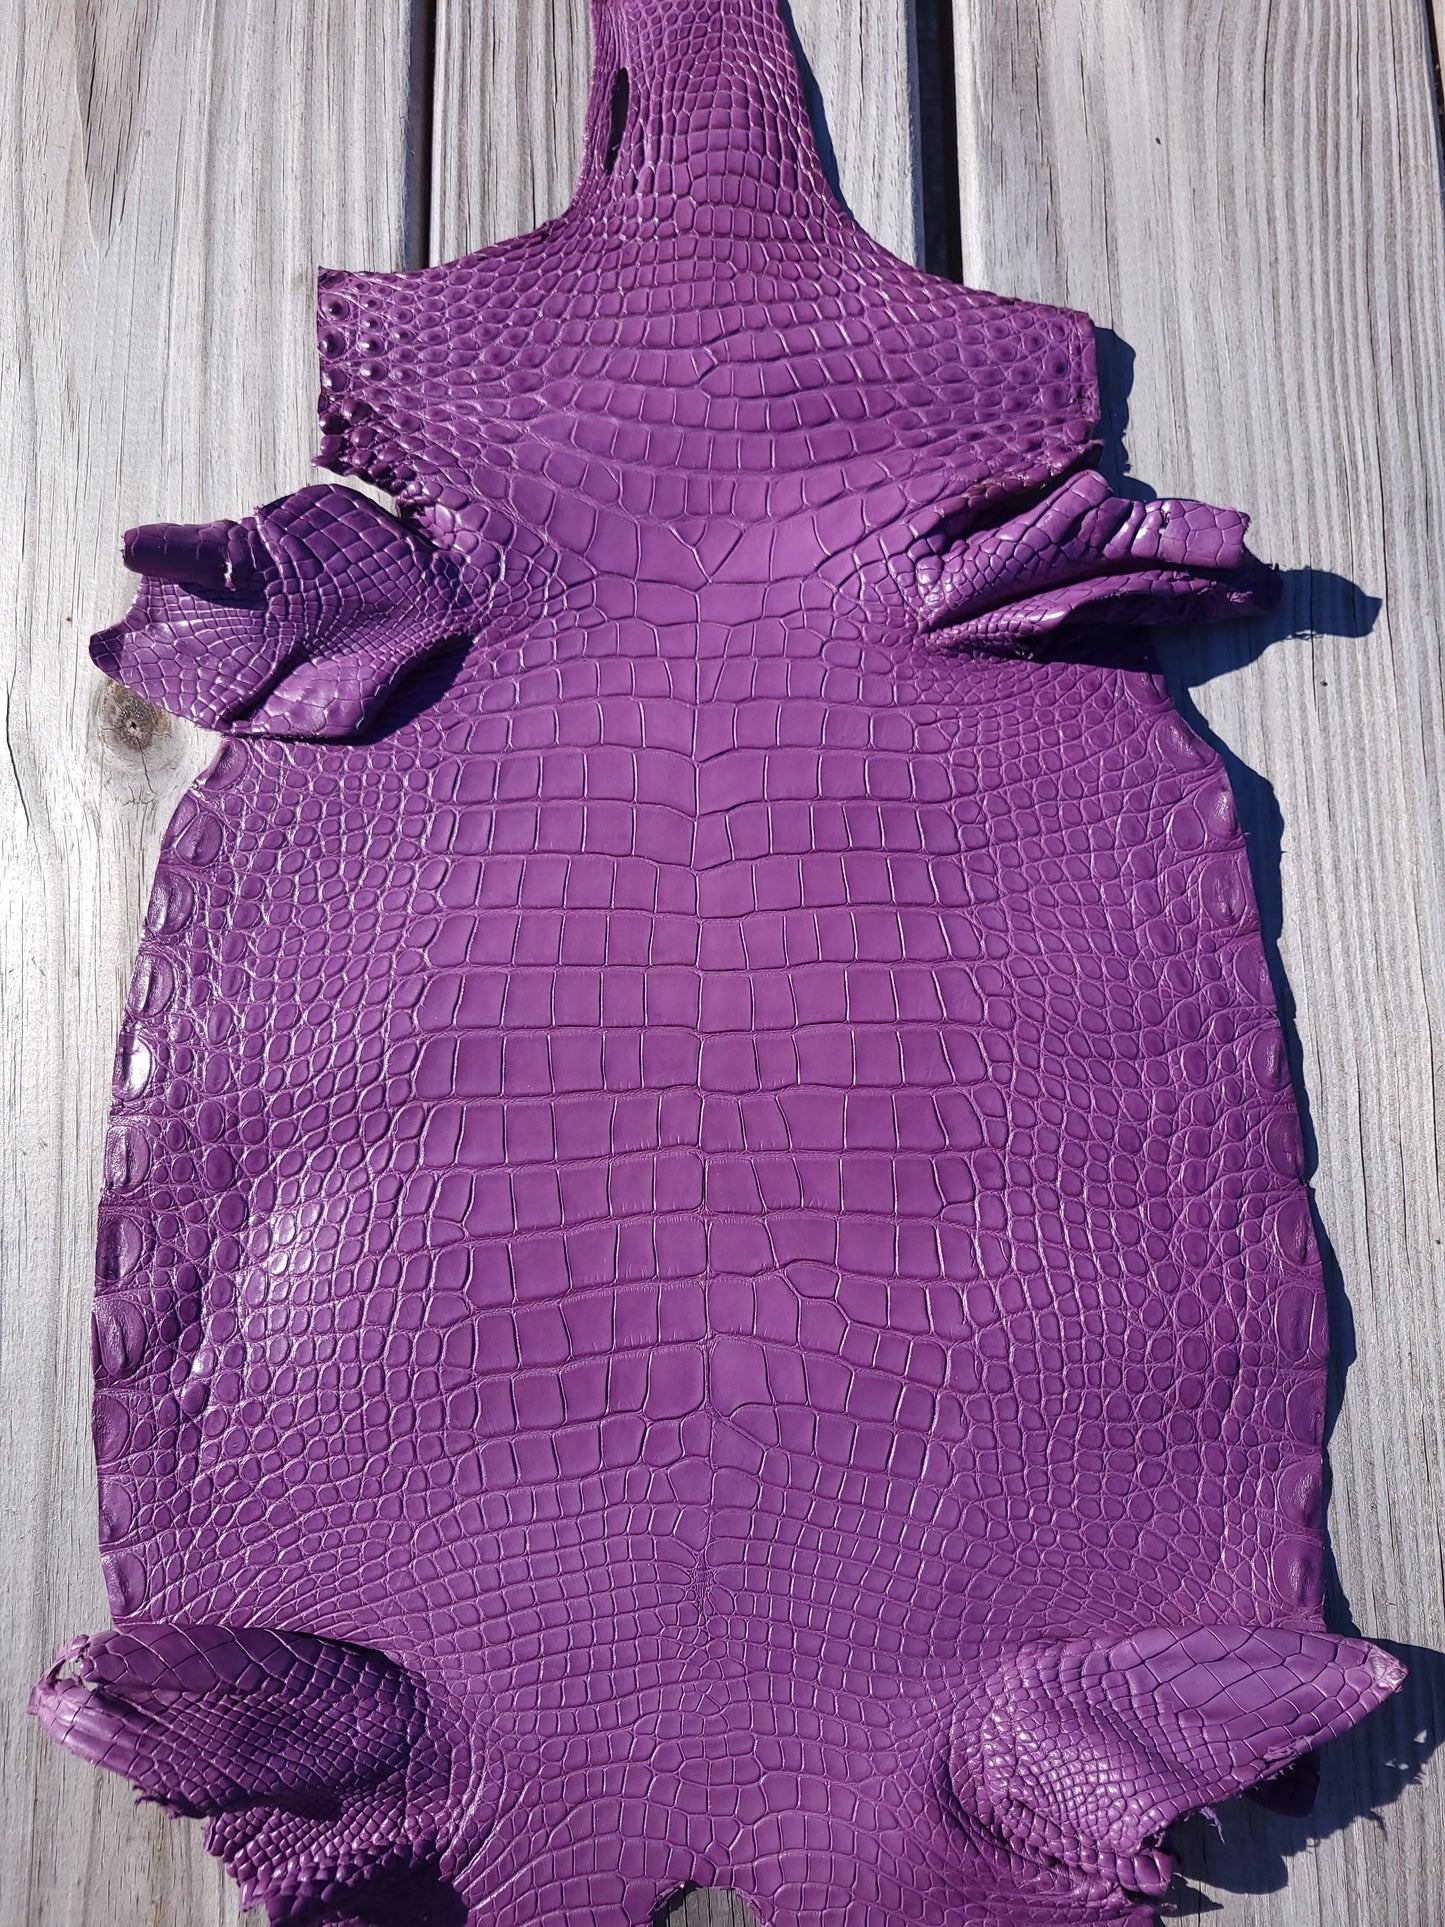 American Alligator -26cm-Grade 1/2 Lavendar Purple (Matte)